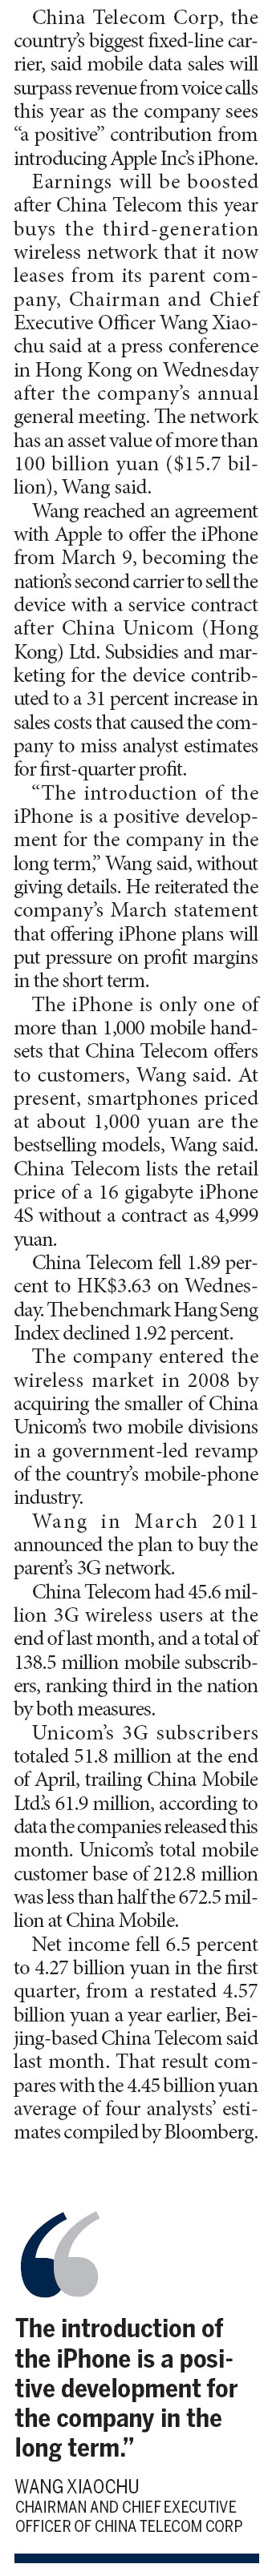 Mobile data to increase revenue for China Telecom